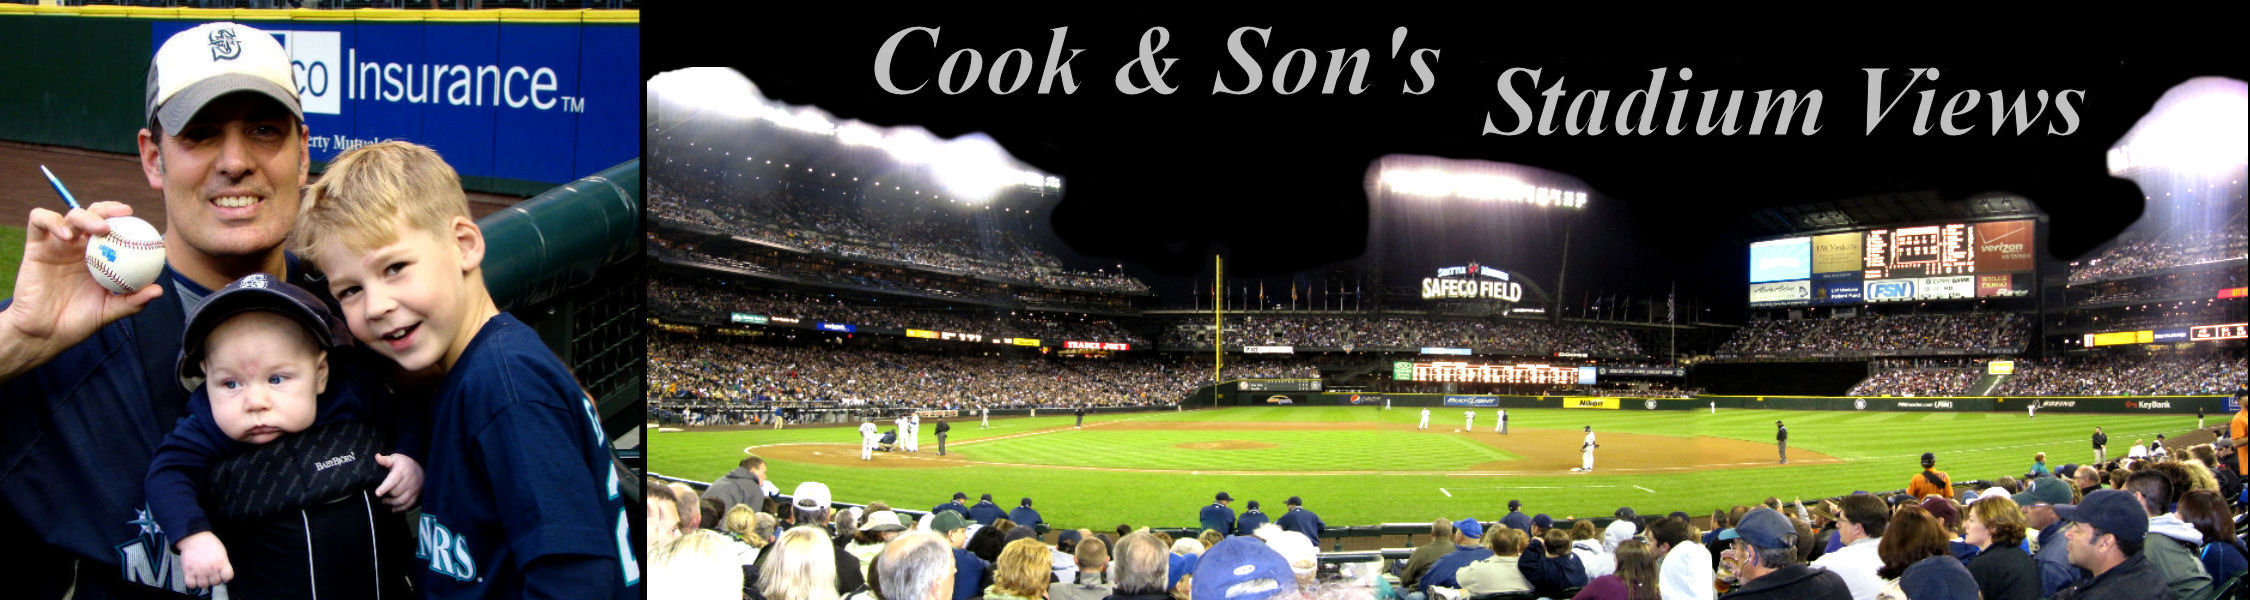 Cook & Son: Stadium Views: Marlins Park